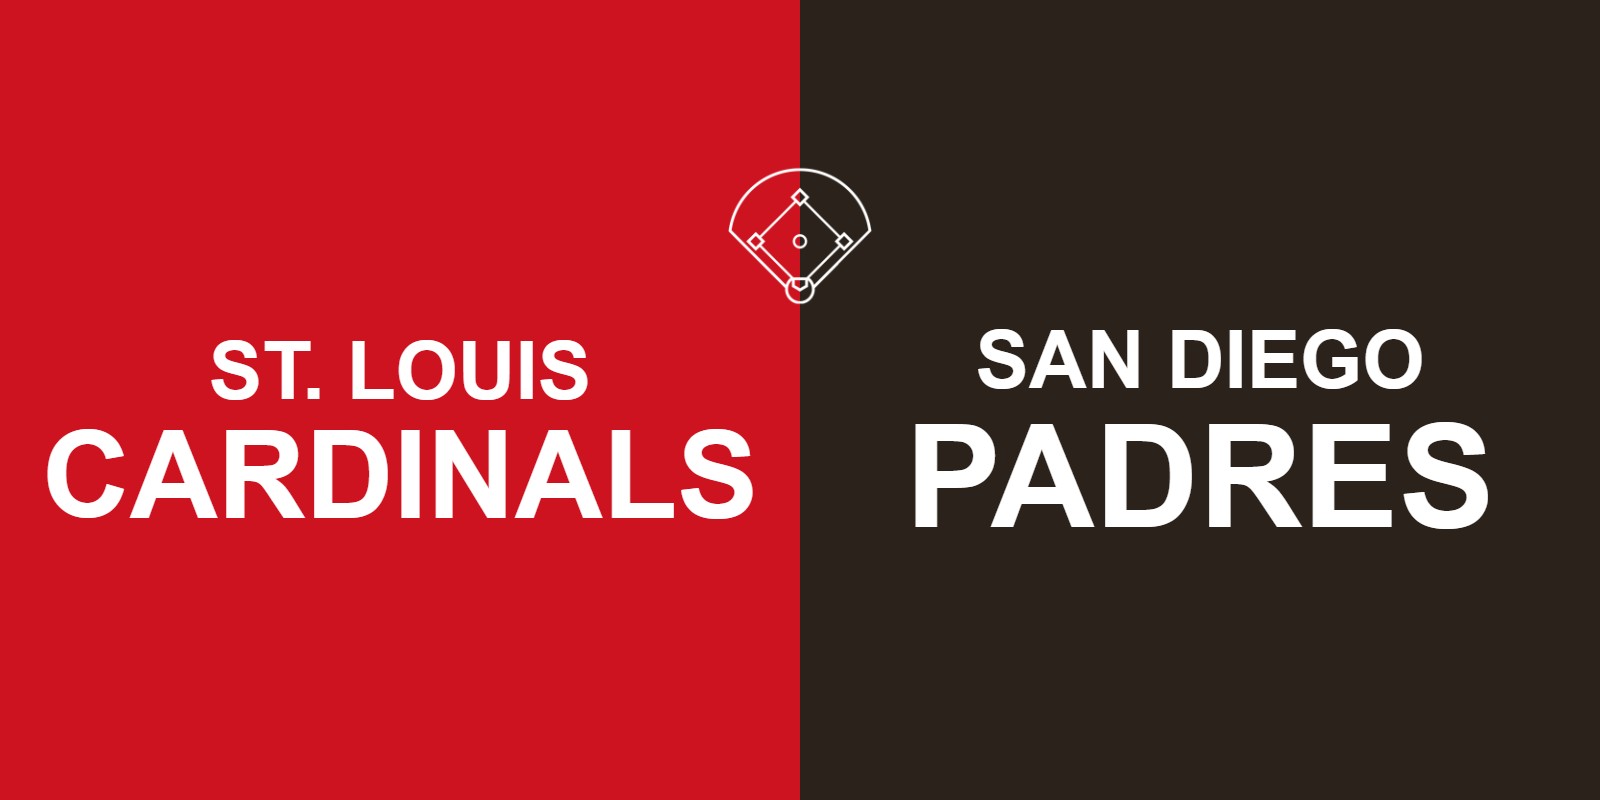 Cardinals vs Padres Tickets